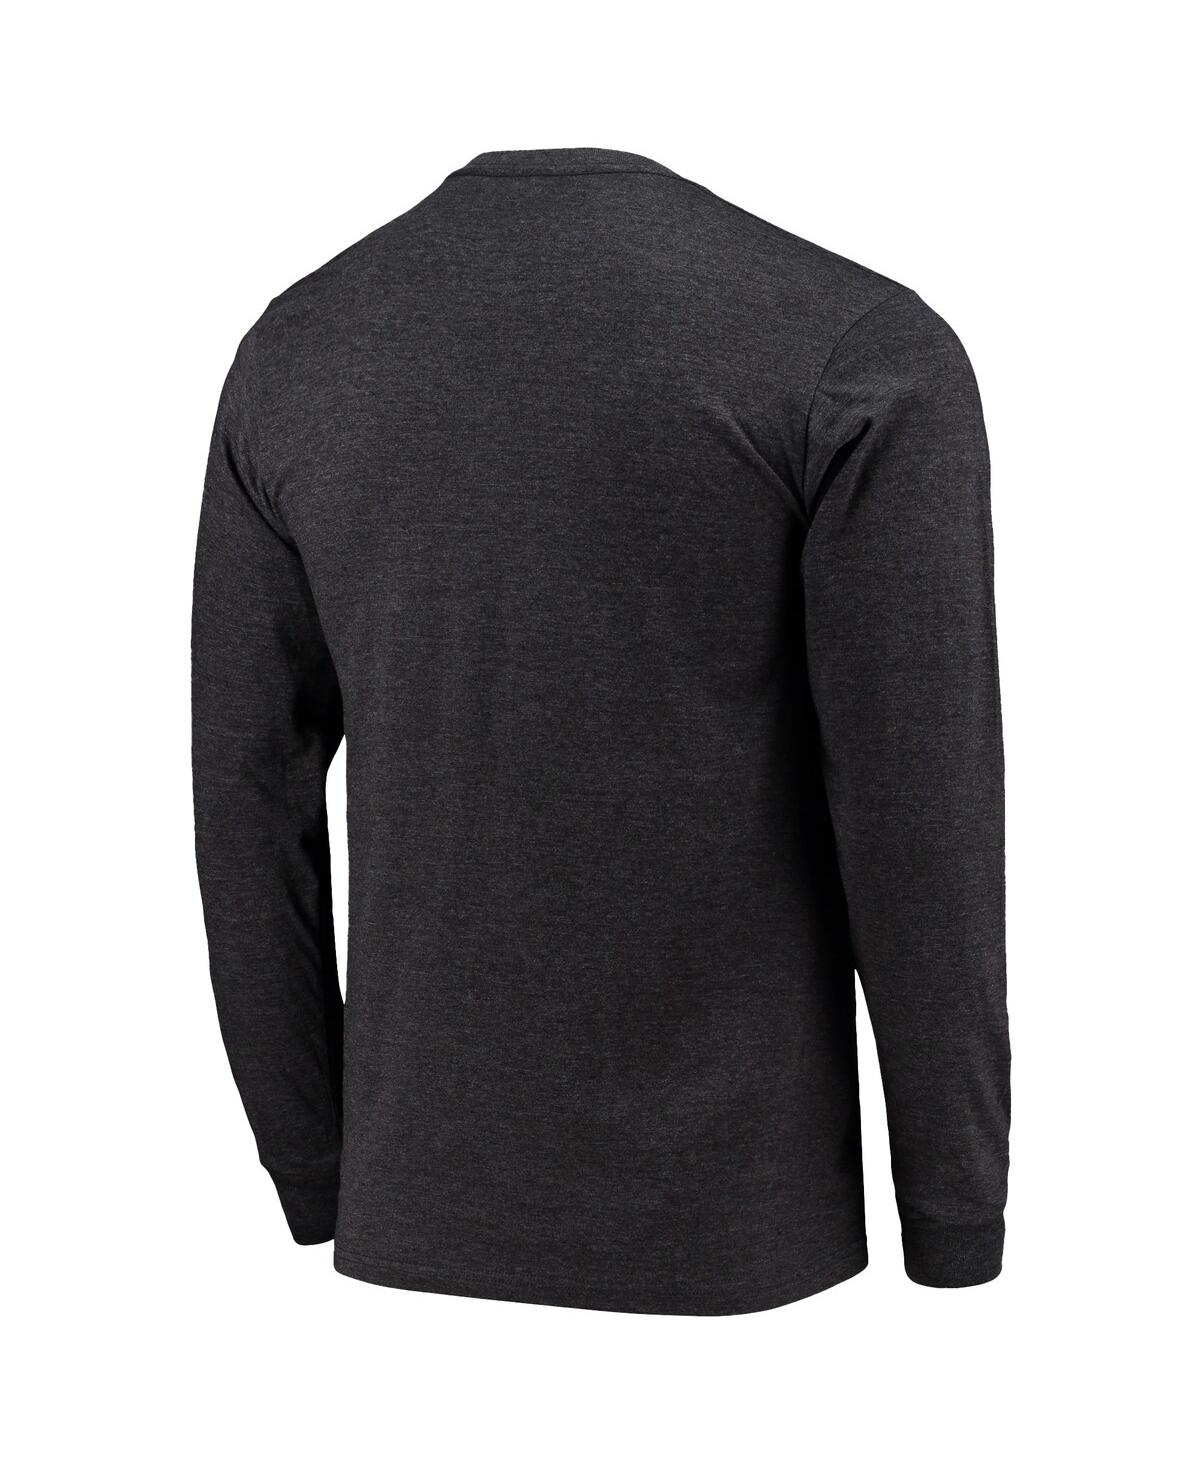 Shop Starter Men's  Heathered Black Carolina Panthers Halftime Long Sleeve T-shirt